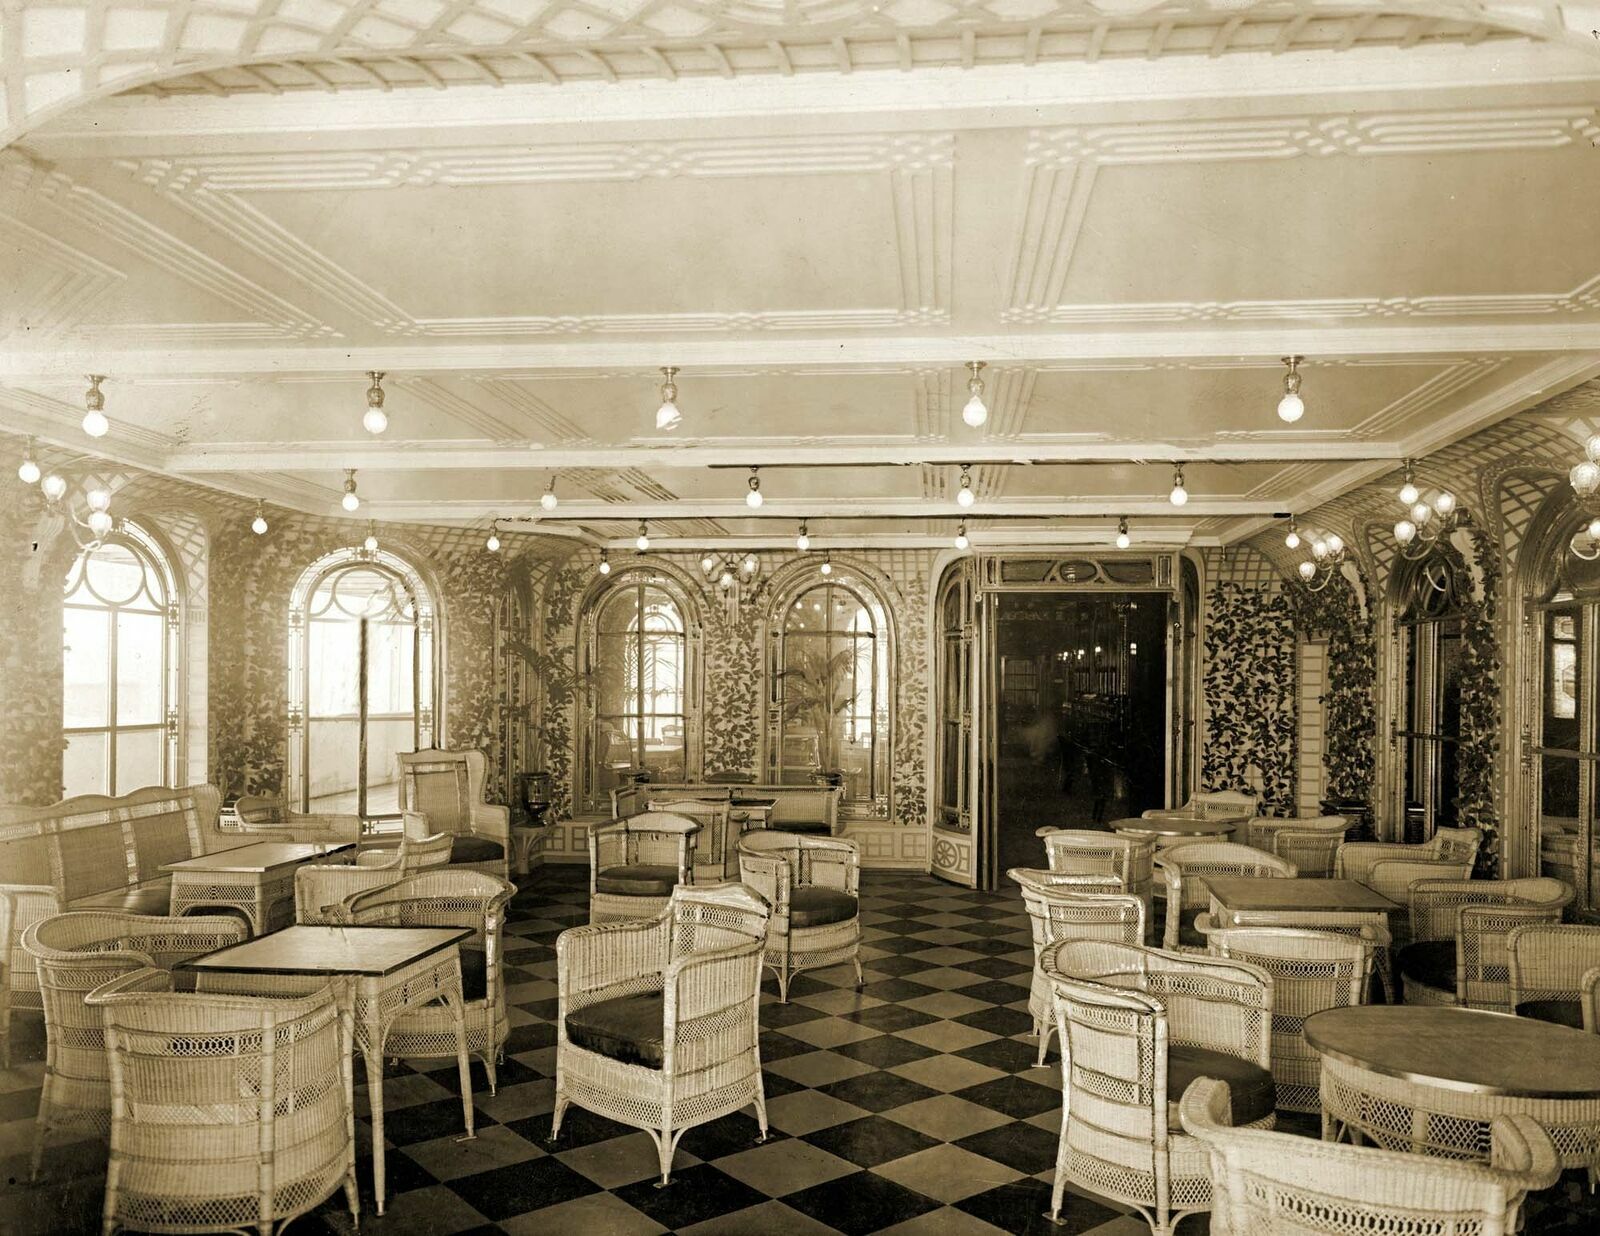 1912 Veranda Cafe & Palm Court of the Titanic Historic Picture Photo Print 13x19